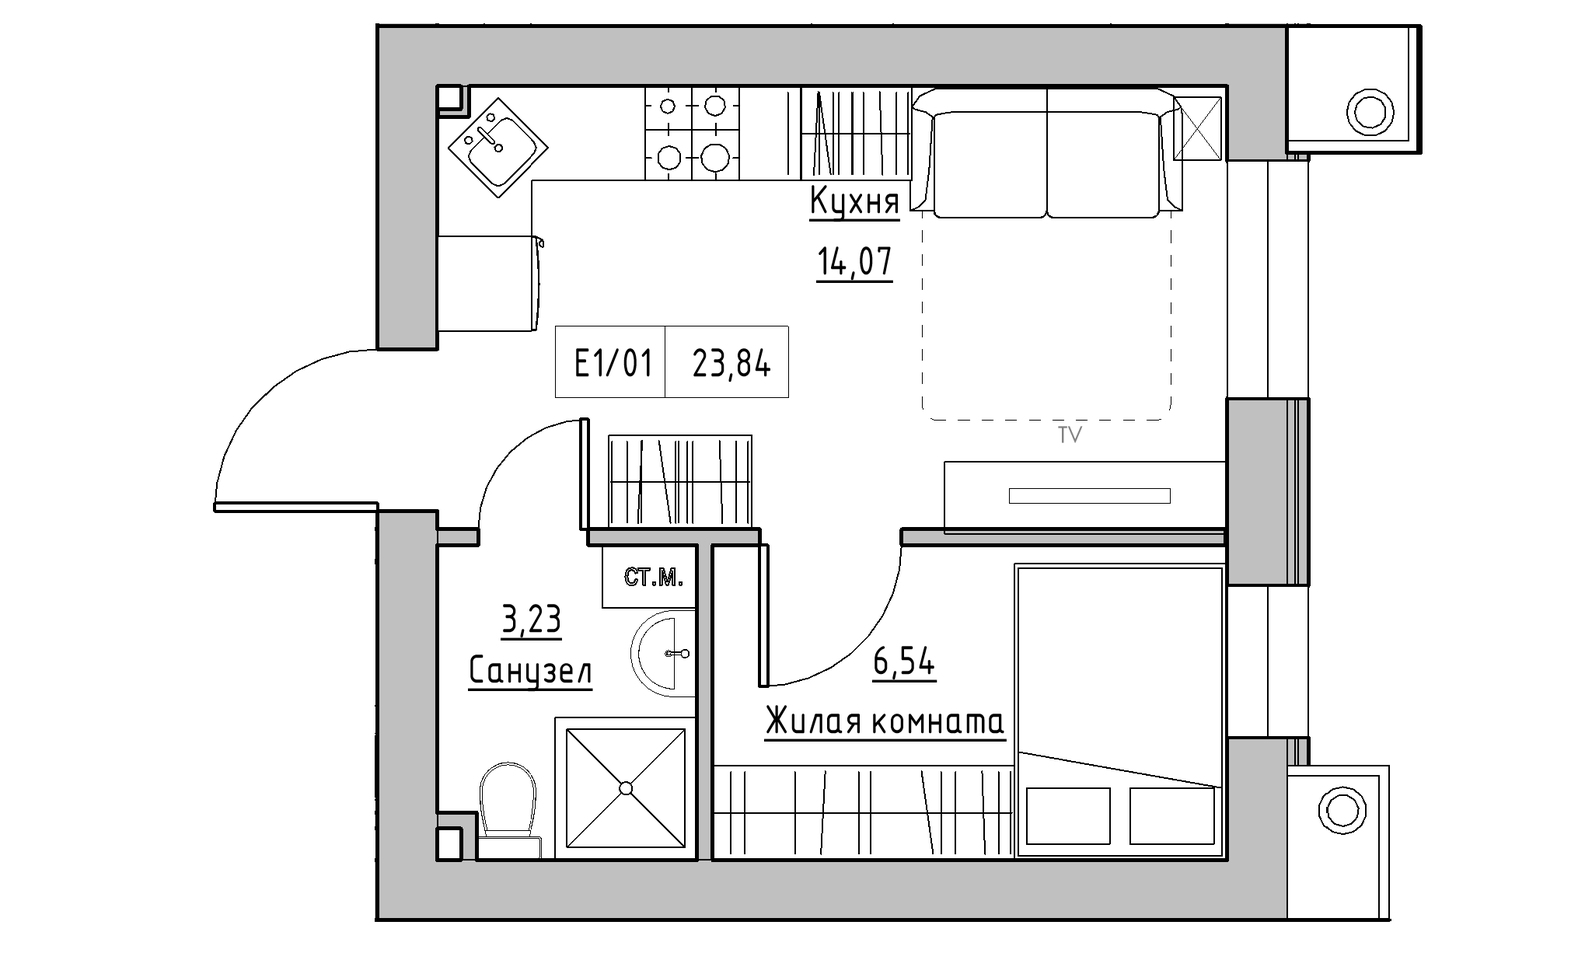 Planning 1-rm flats area 23.84m2, KS-014-02/0011.